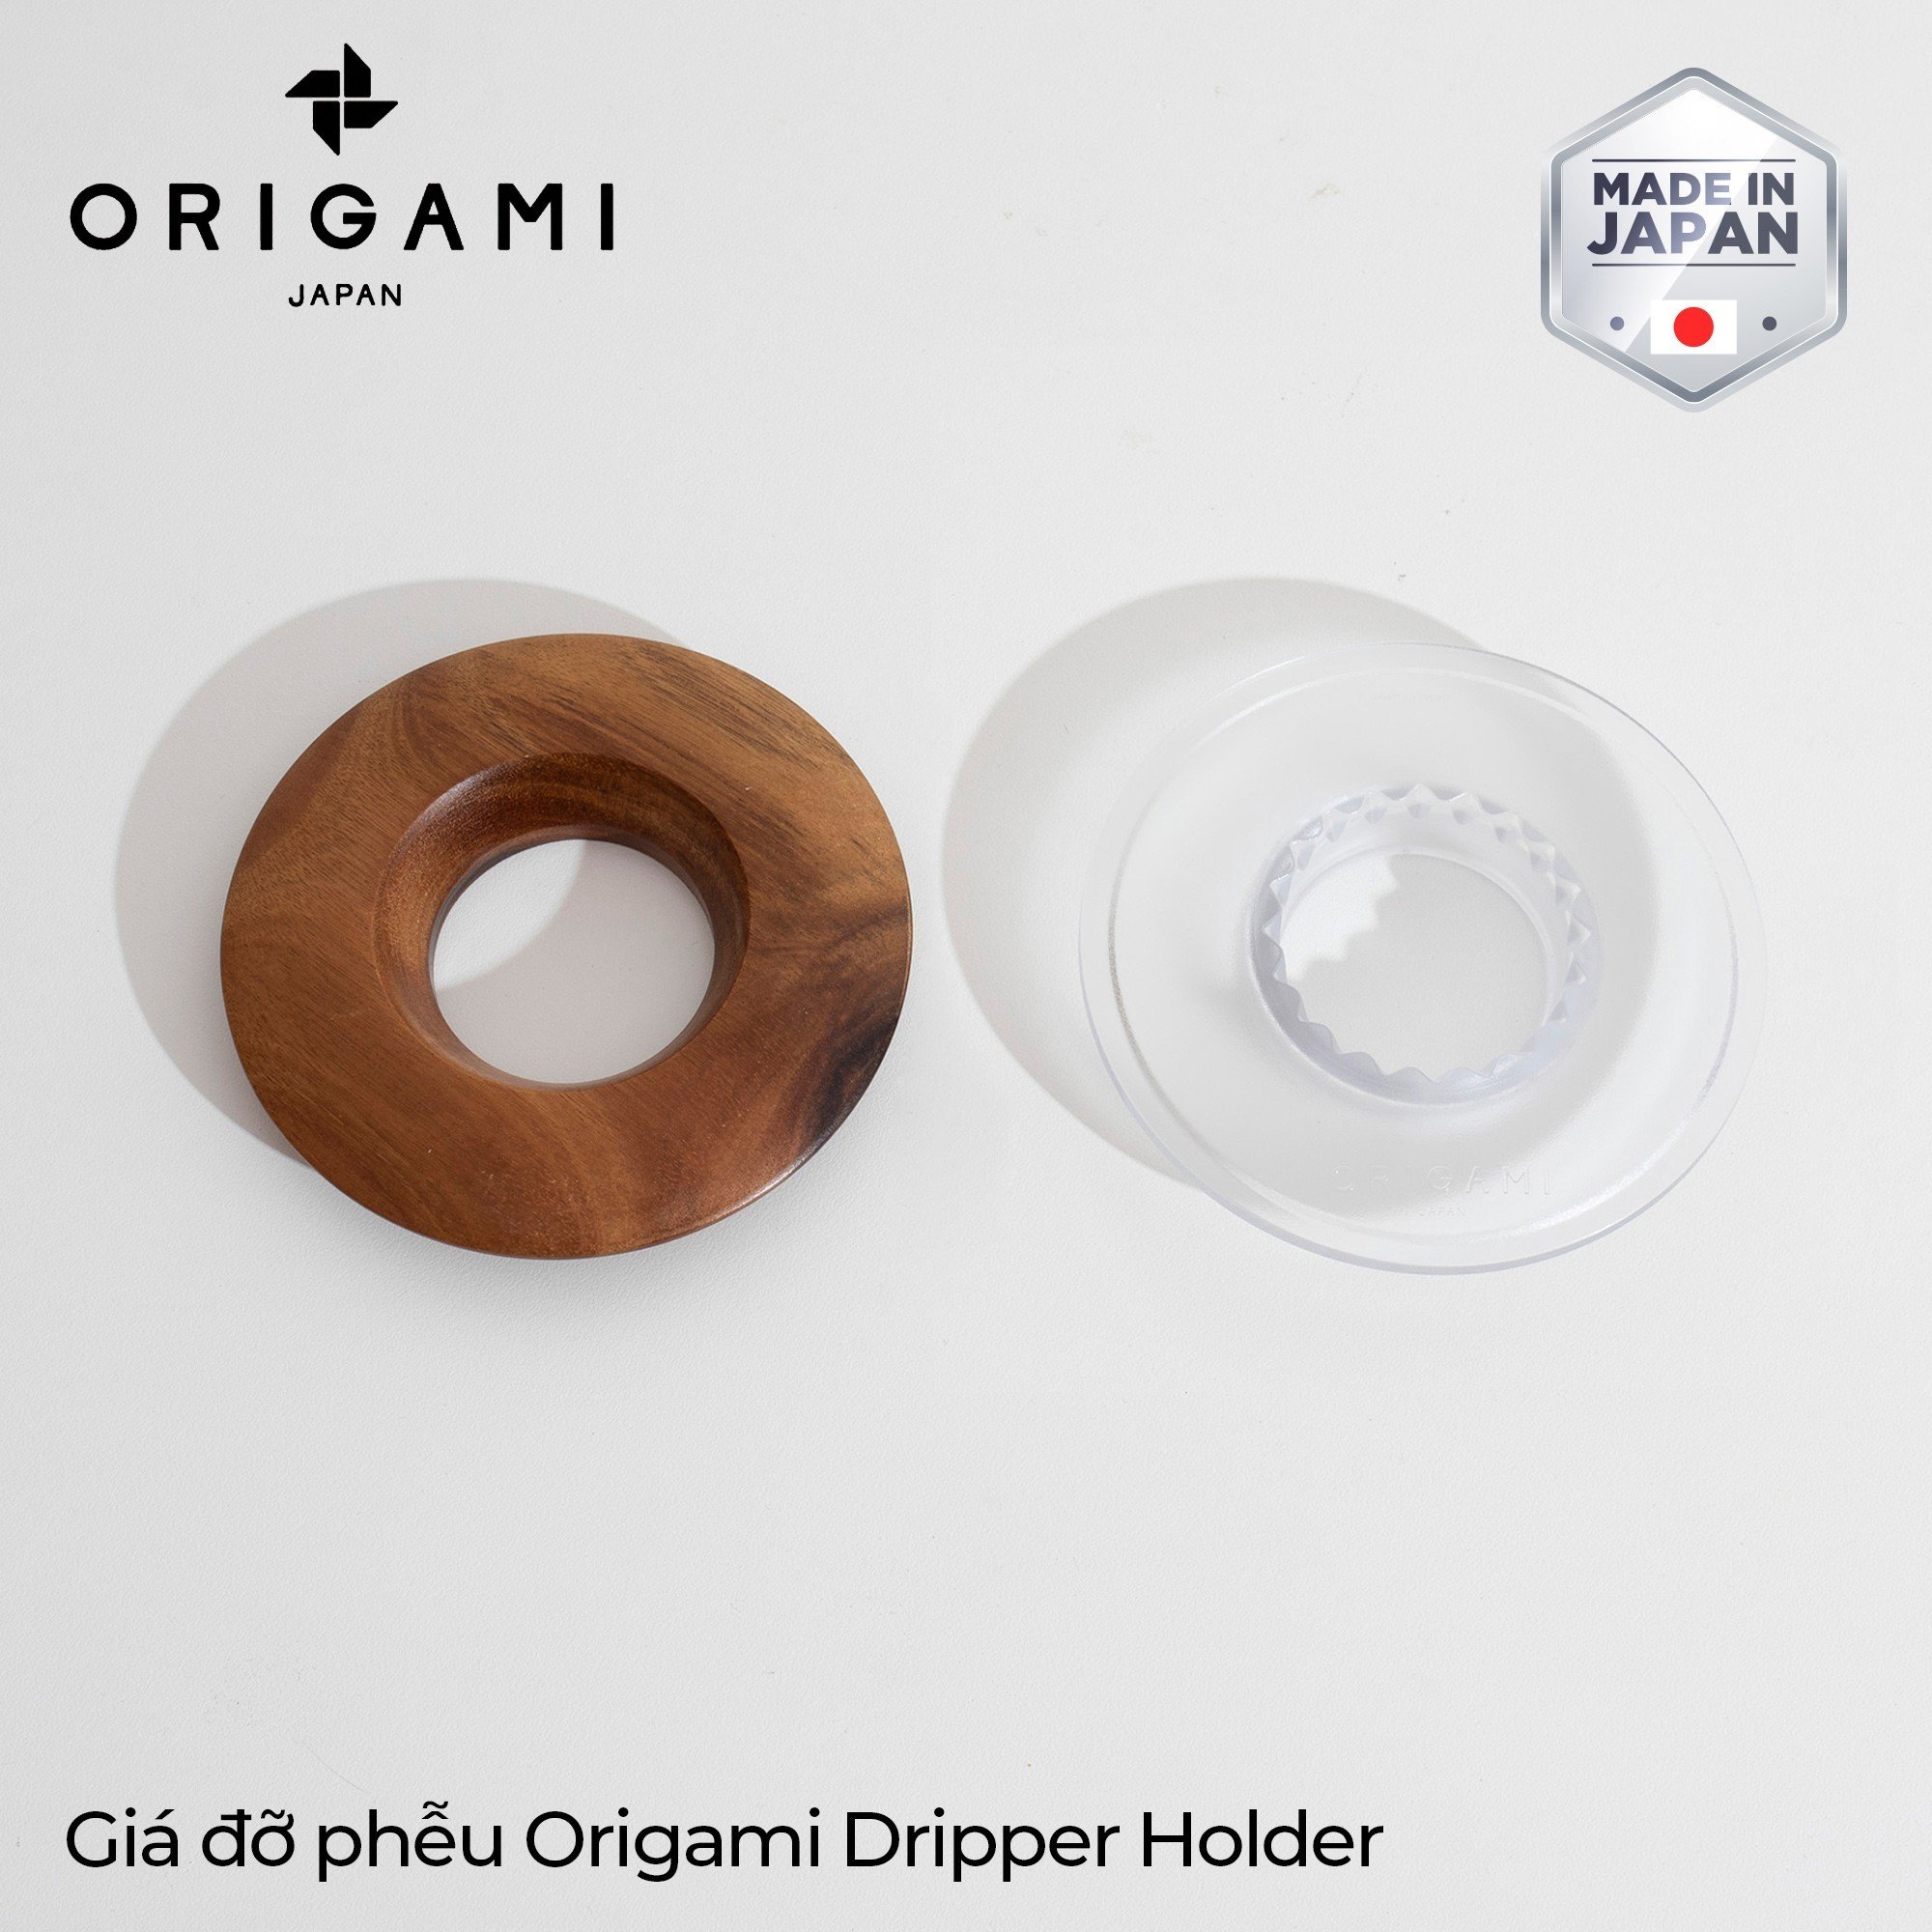 Giá đỡ phễu Origami Dripper Holder